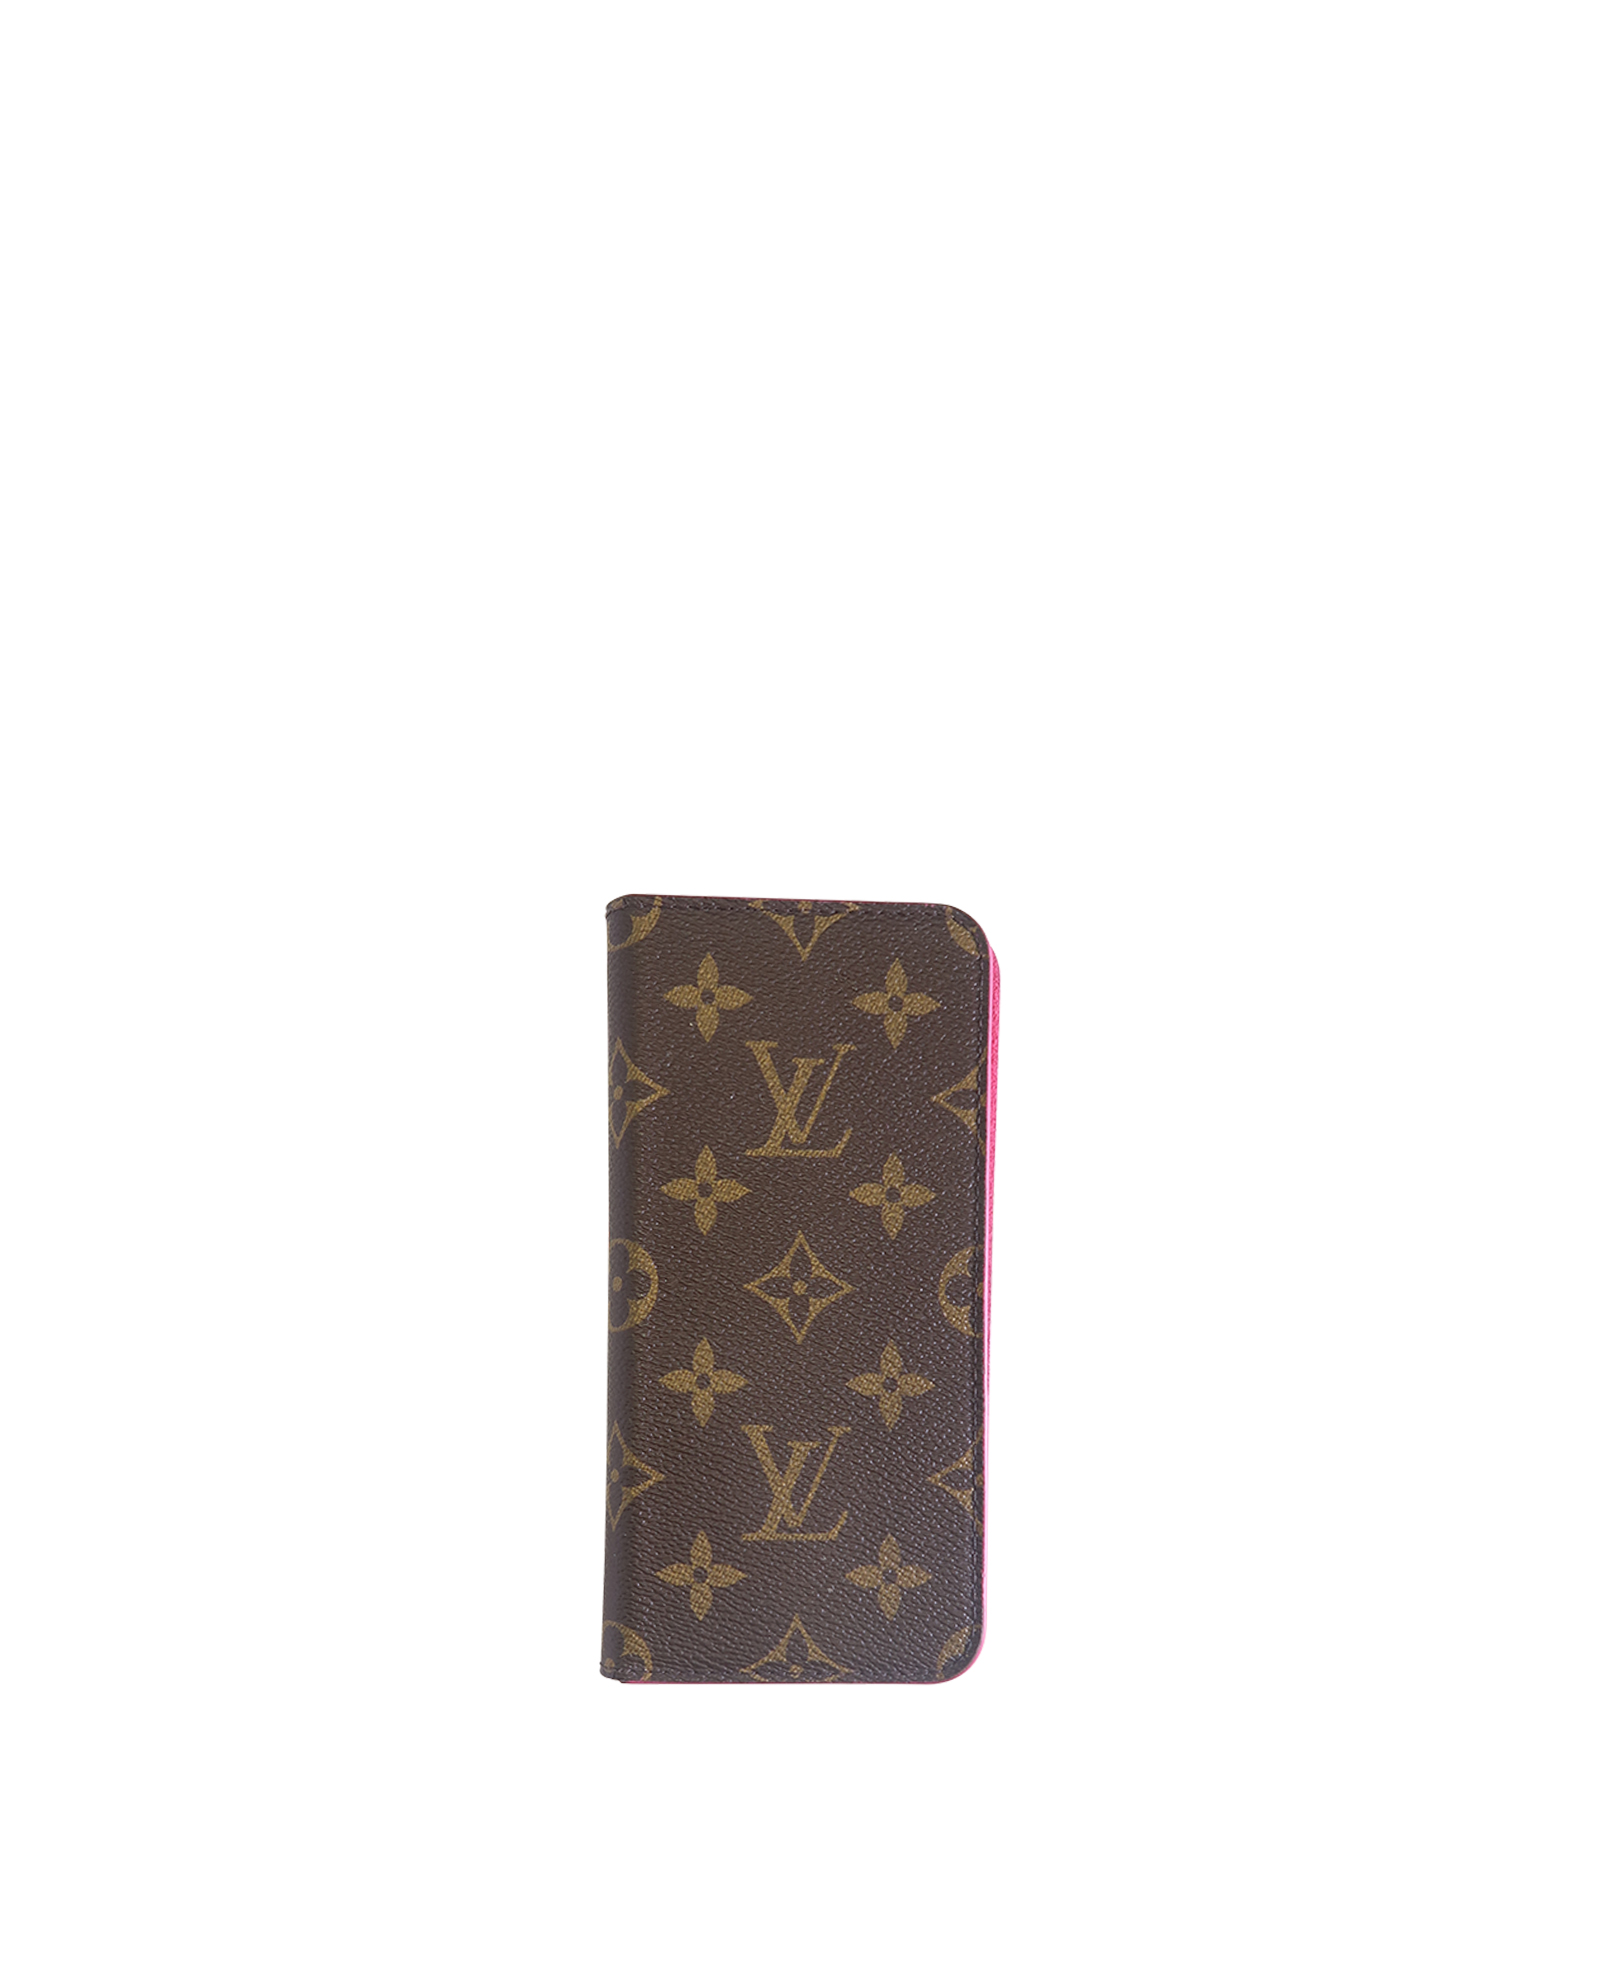 overførsel Og så videre Tether Louis Vuitton Iphone 8+ Case, Small Leather Goods - Designer Exchange | Buy  Sell Exchange